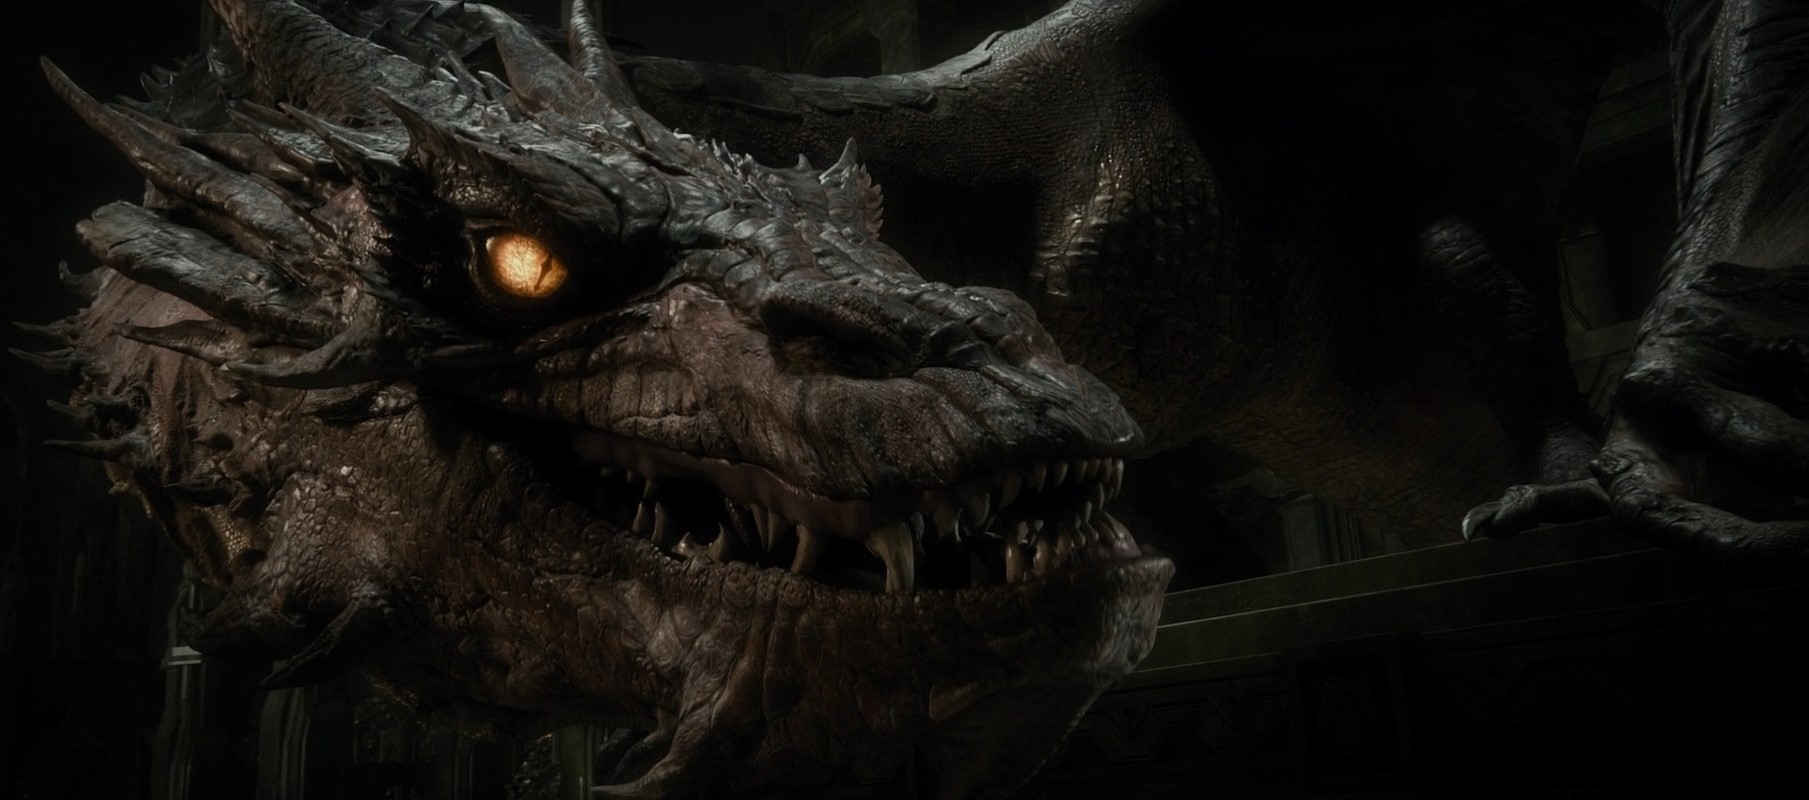 𝙴𝚣𝚛𝚊 𝙰𝚞𝚝𝚘𝚖𝚎𝚍𝚘𝚗 𝙳'𝙰𝚗𝚊𝚛𝚌𝚑𝚘𝚜 on X: My three favourite  Dragons are: Smaug, Drogon, & Cyan Bloodbane  /  X